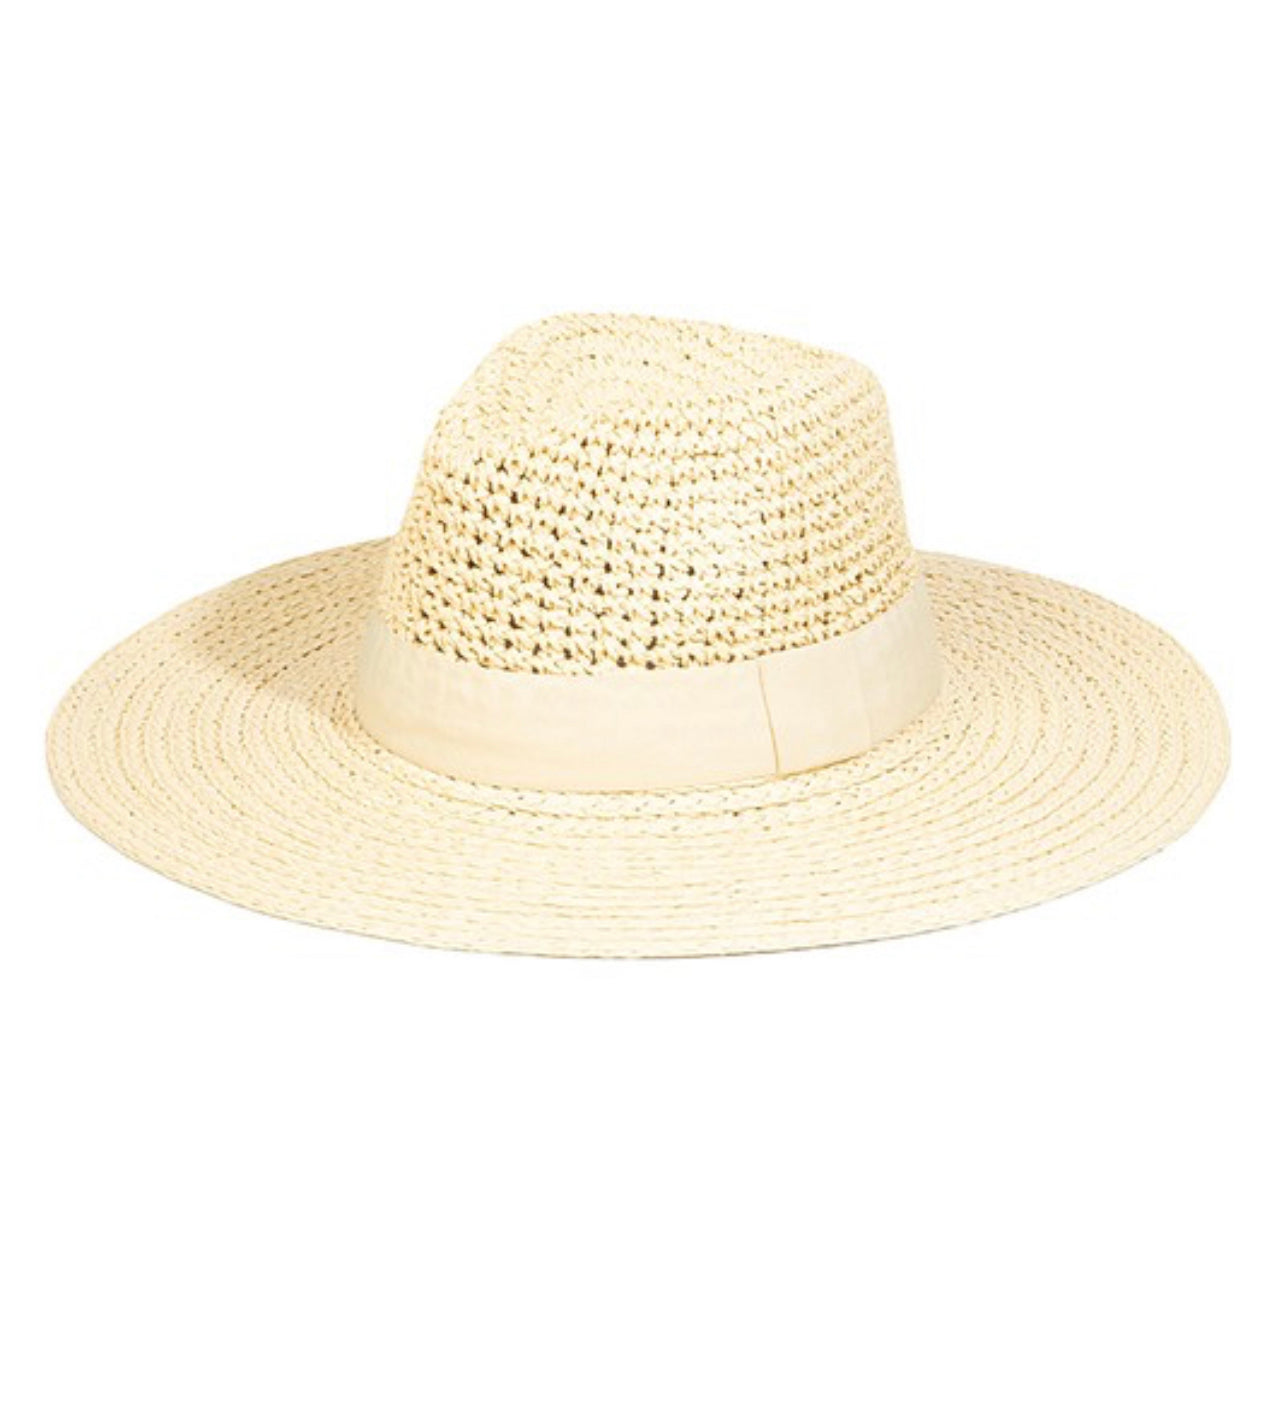 “Catalina” Straw Hat